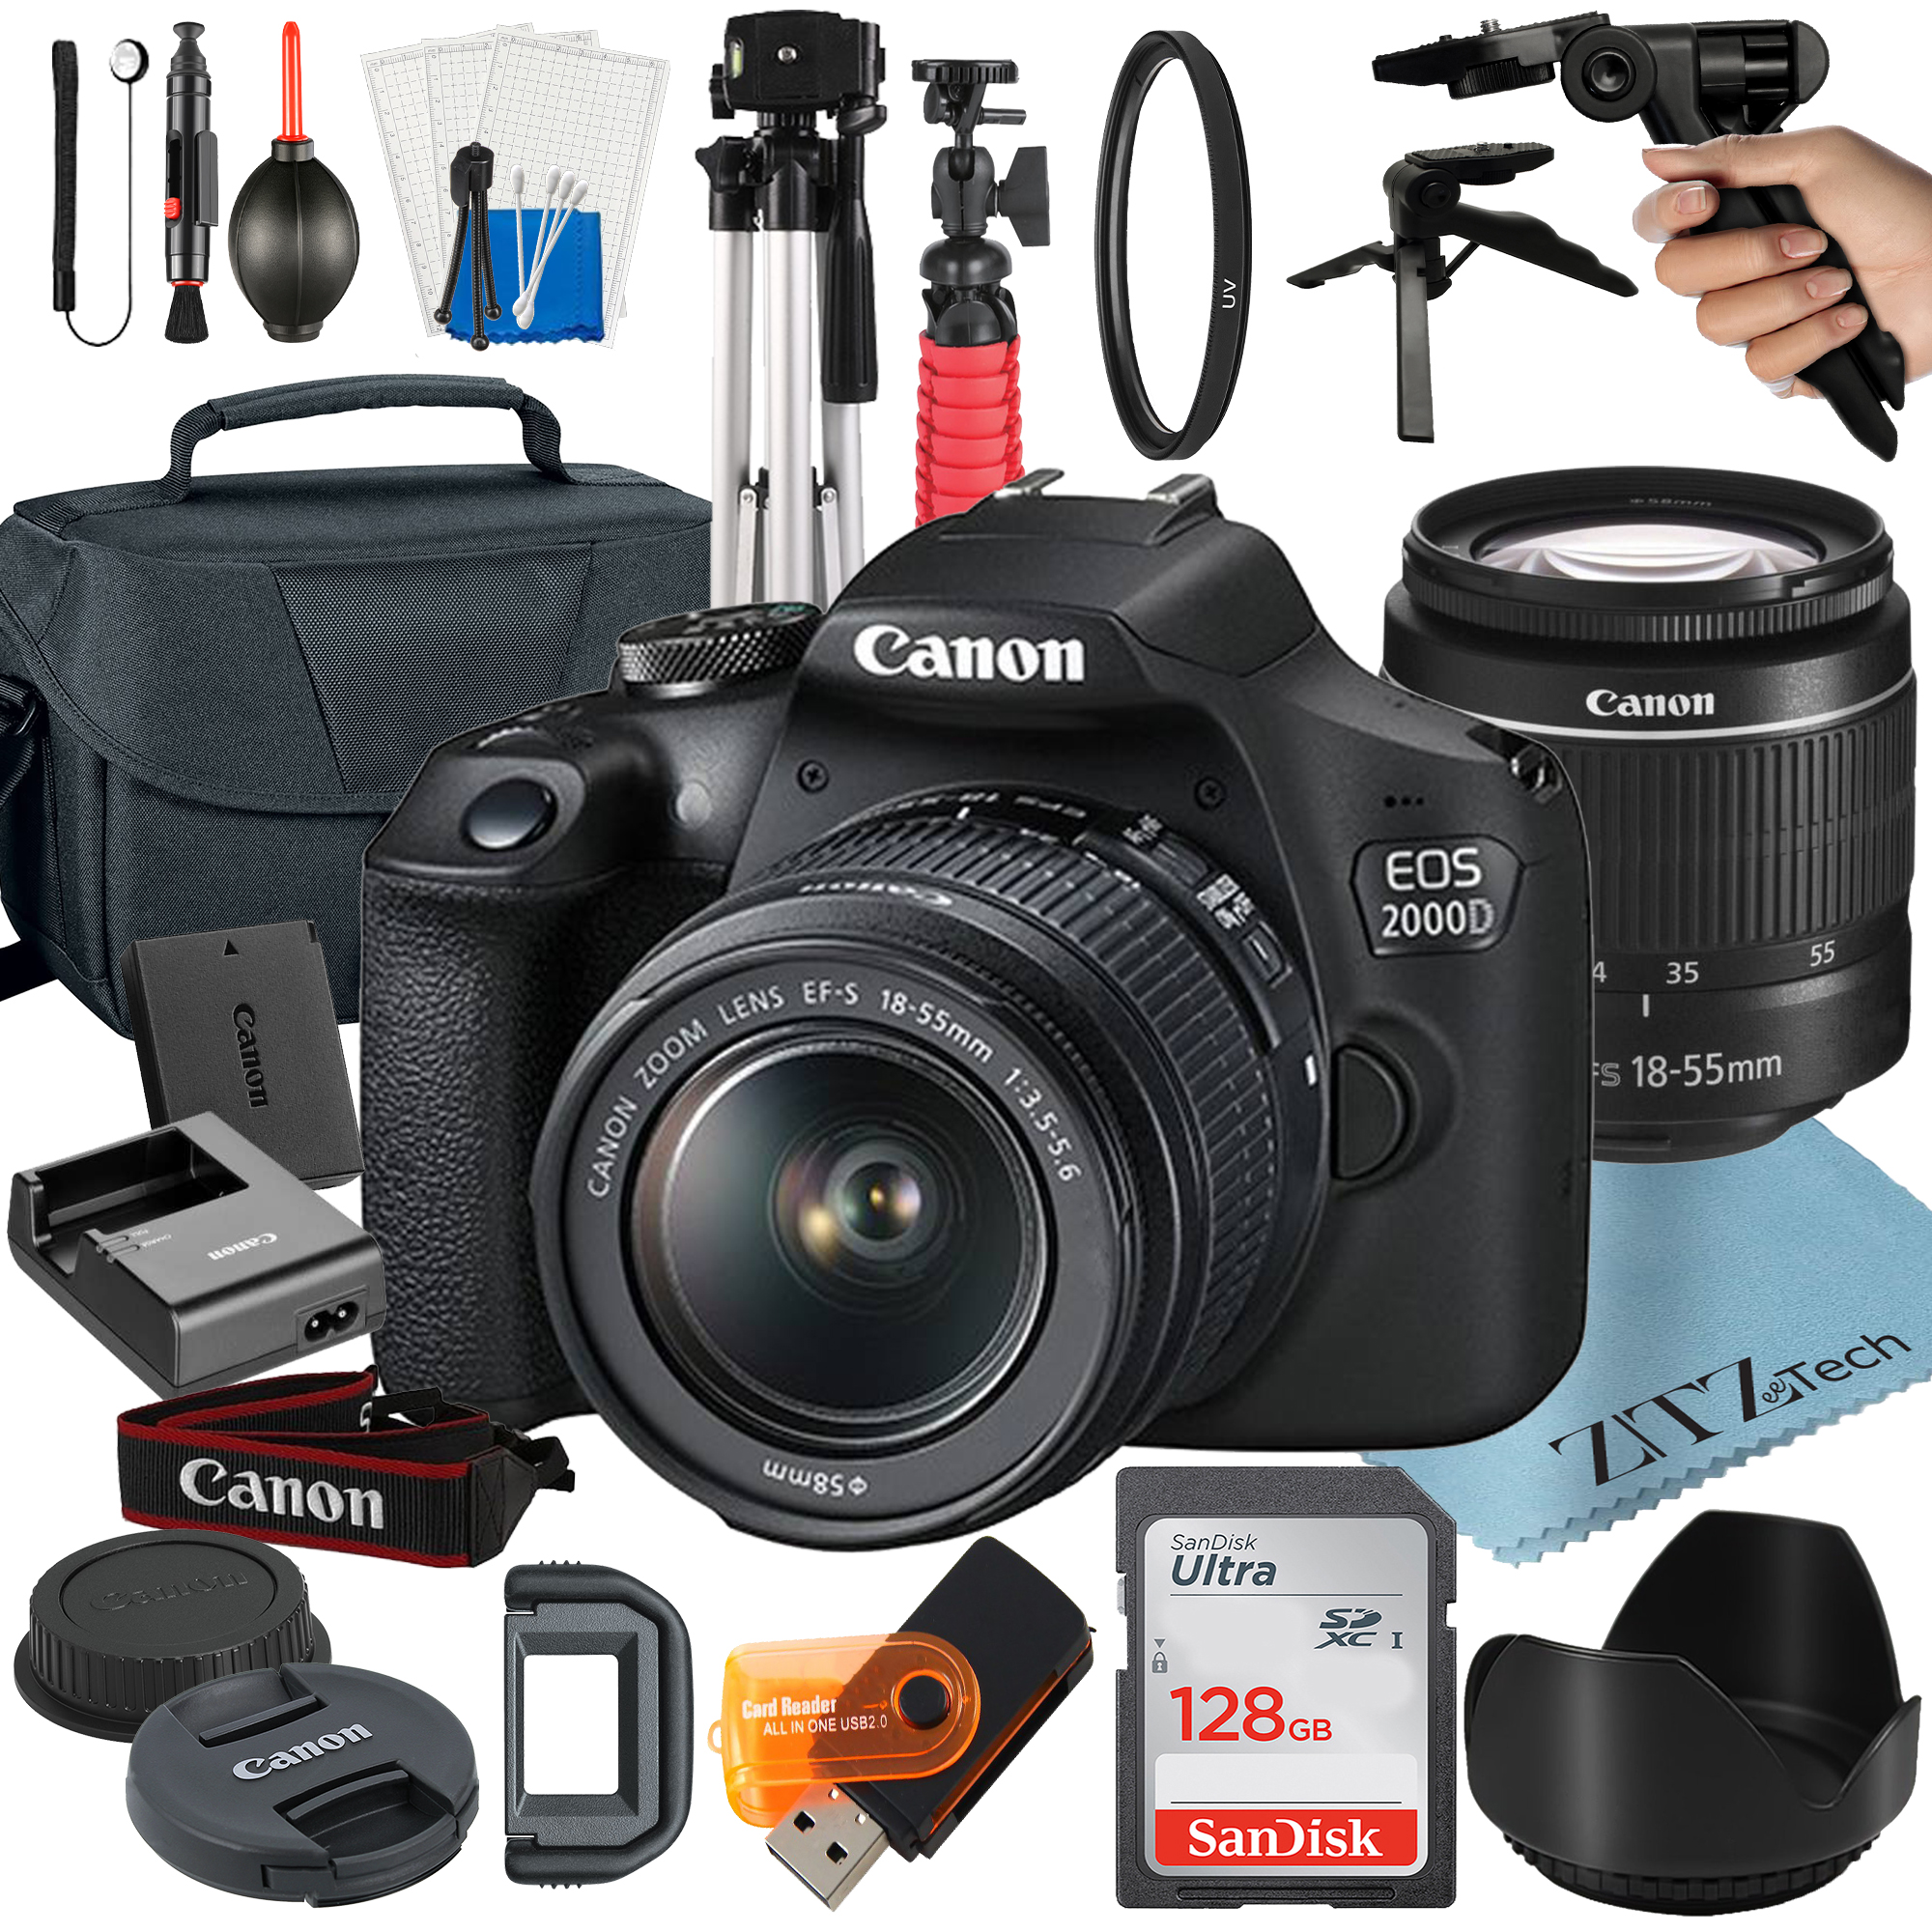 Canon EOS 2000D / Rebel T7 DSLR Camera Bundle with 18-55mm Zoom Lens + 128GB SanDisk Card + Case + Tripod + ZeeTech Accessory